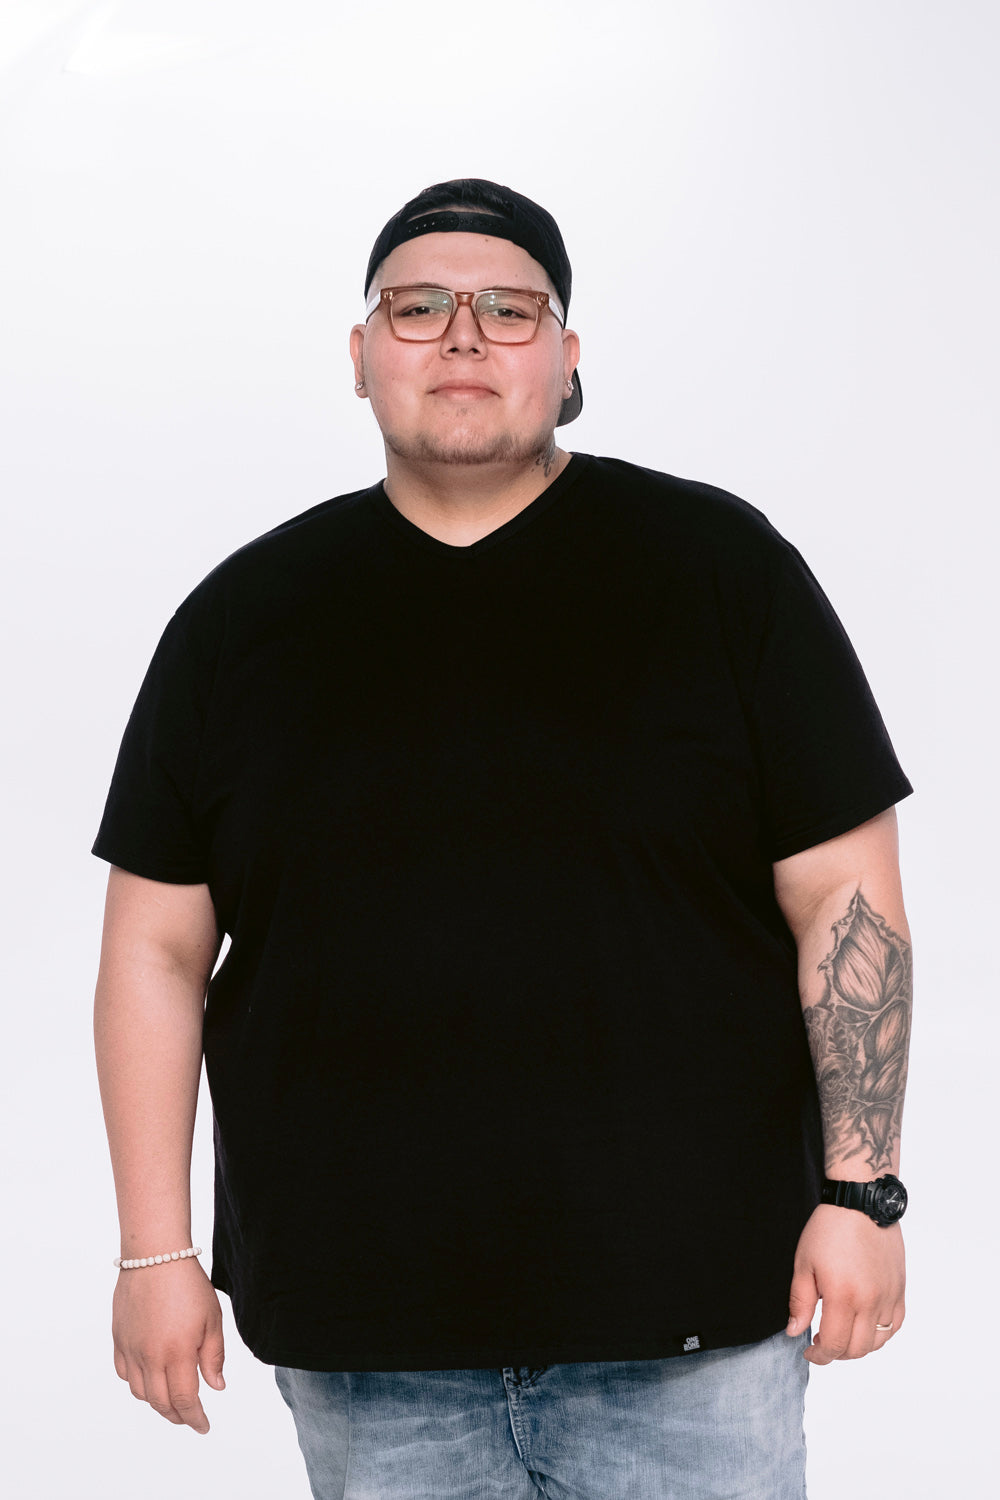 model-specs: Tony is 5'11 | 400 lbs | size 5